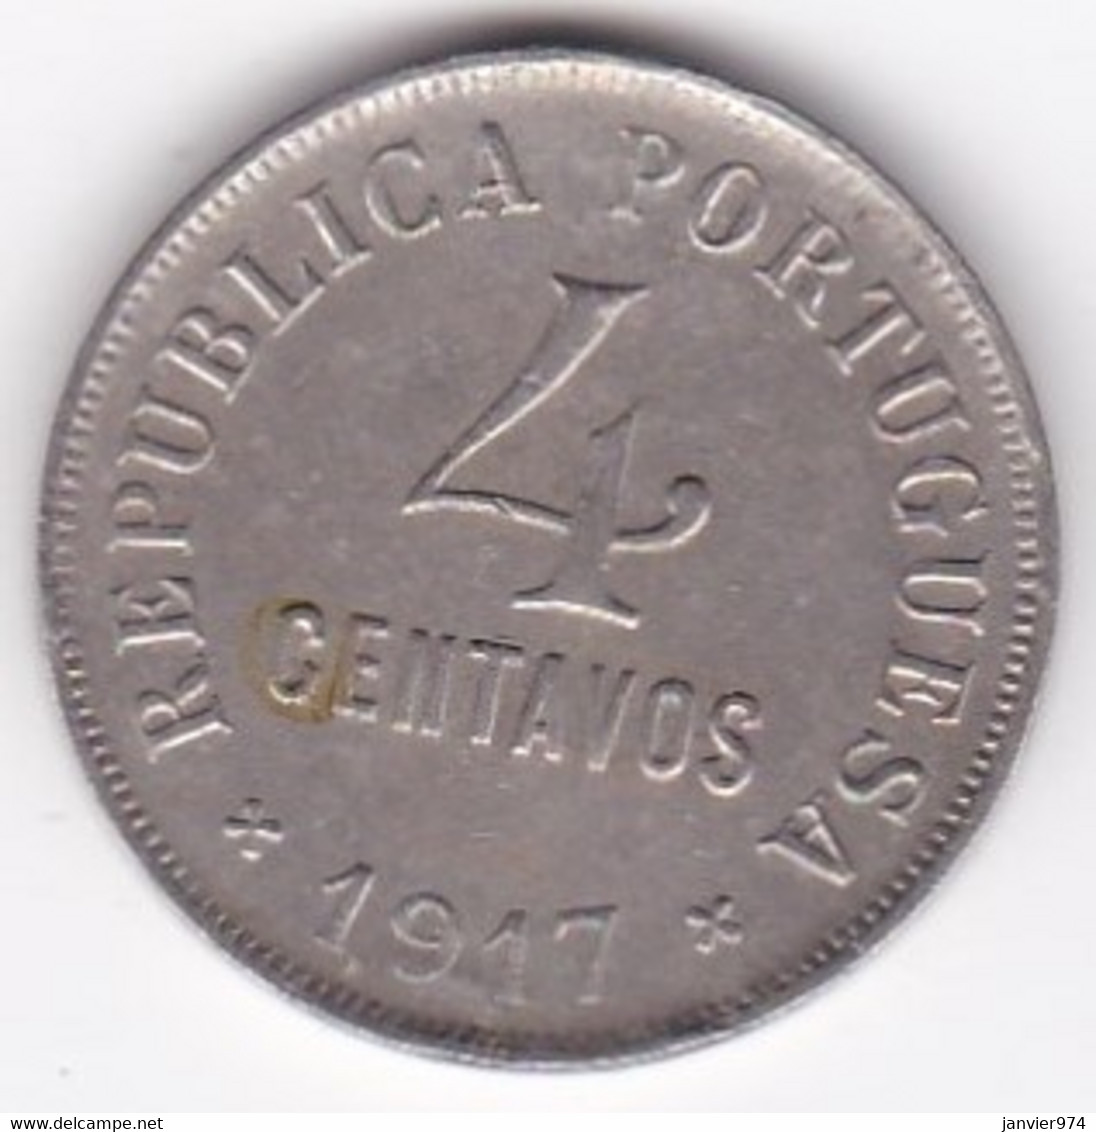 Portugal 4 Centavos 1917 , En Cupronickel, KM# 566 - Portugal